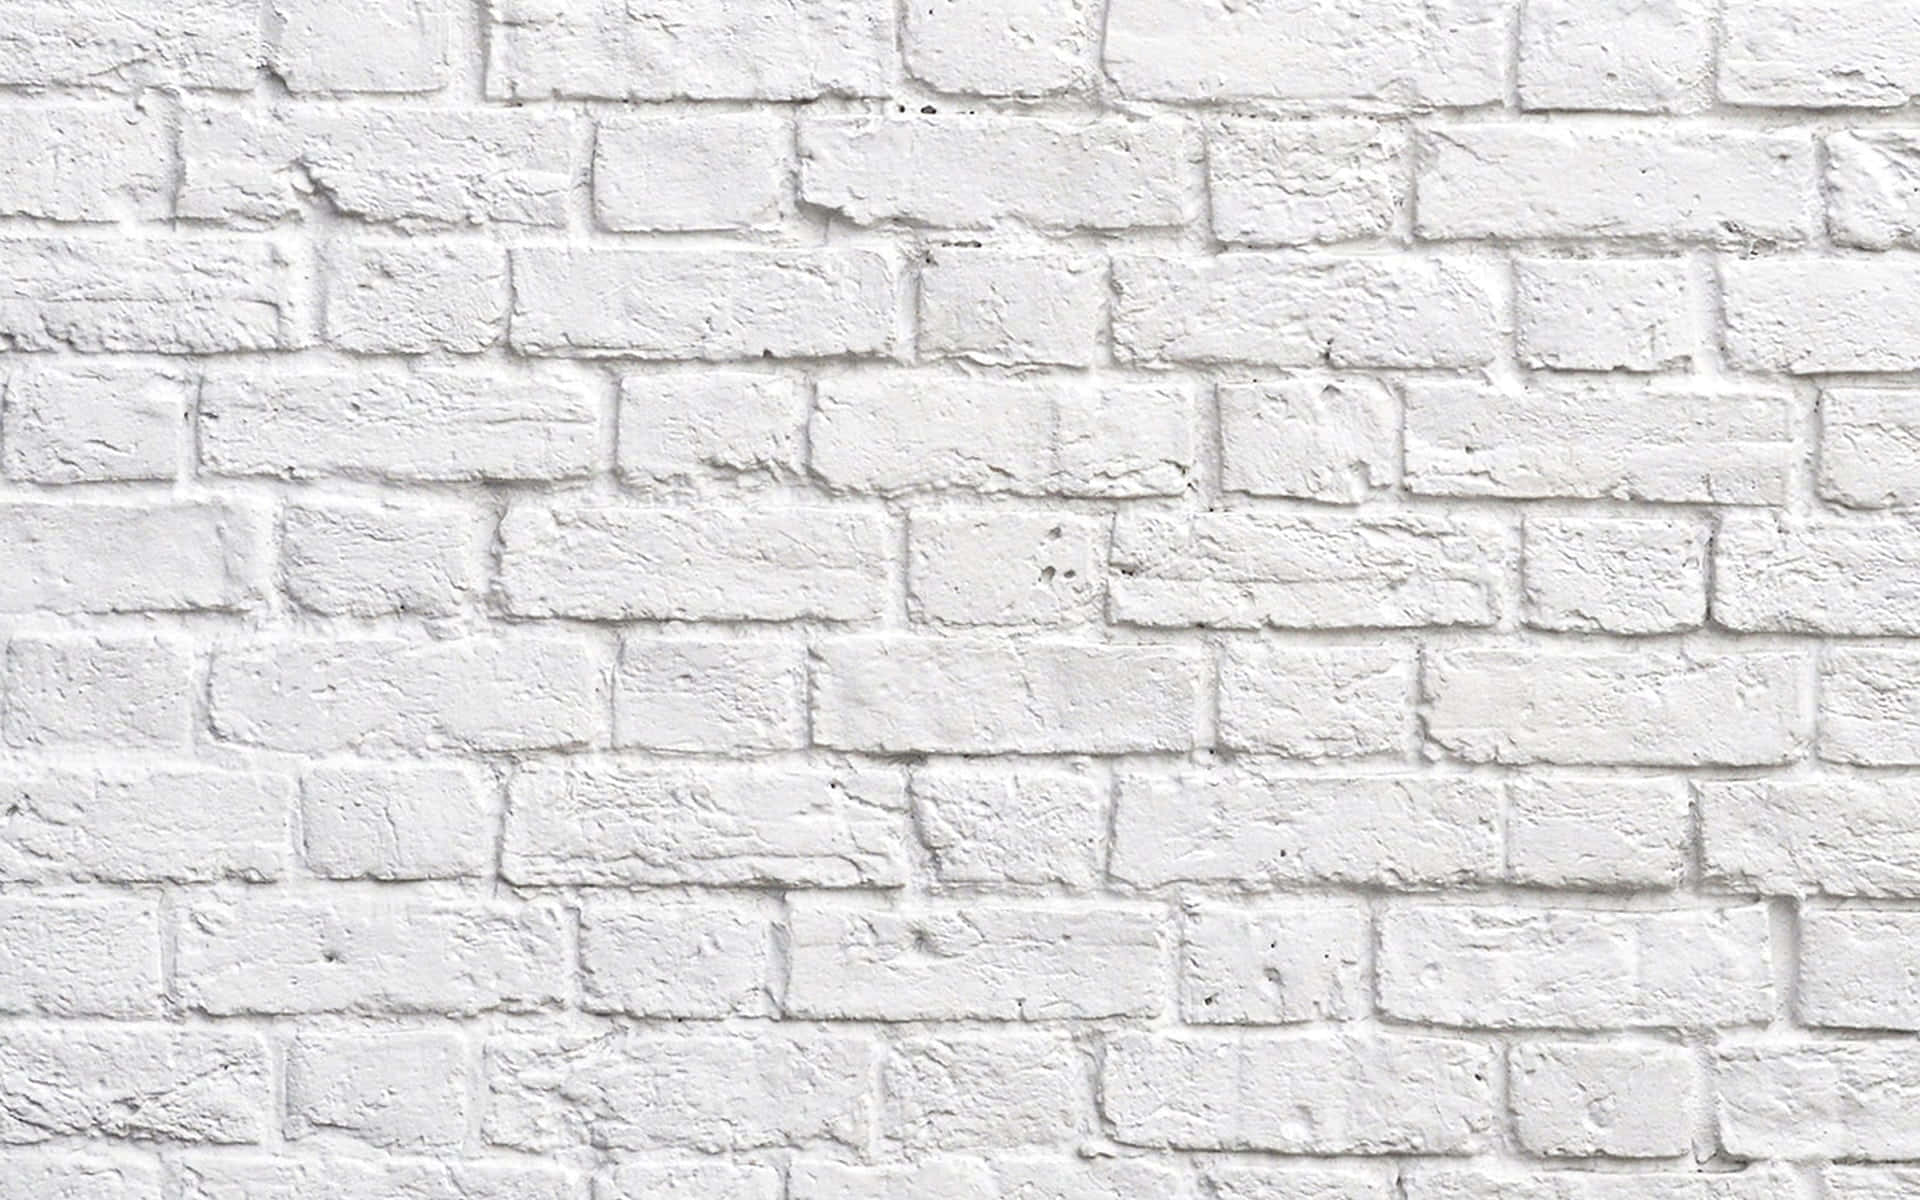 Rough Brick Wall White Texture Background